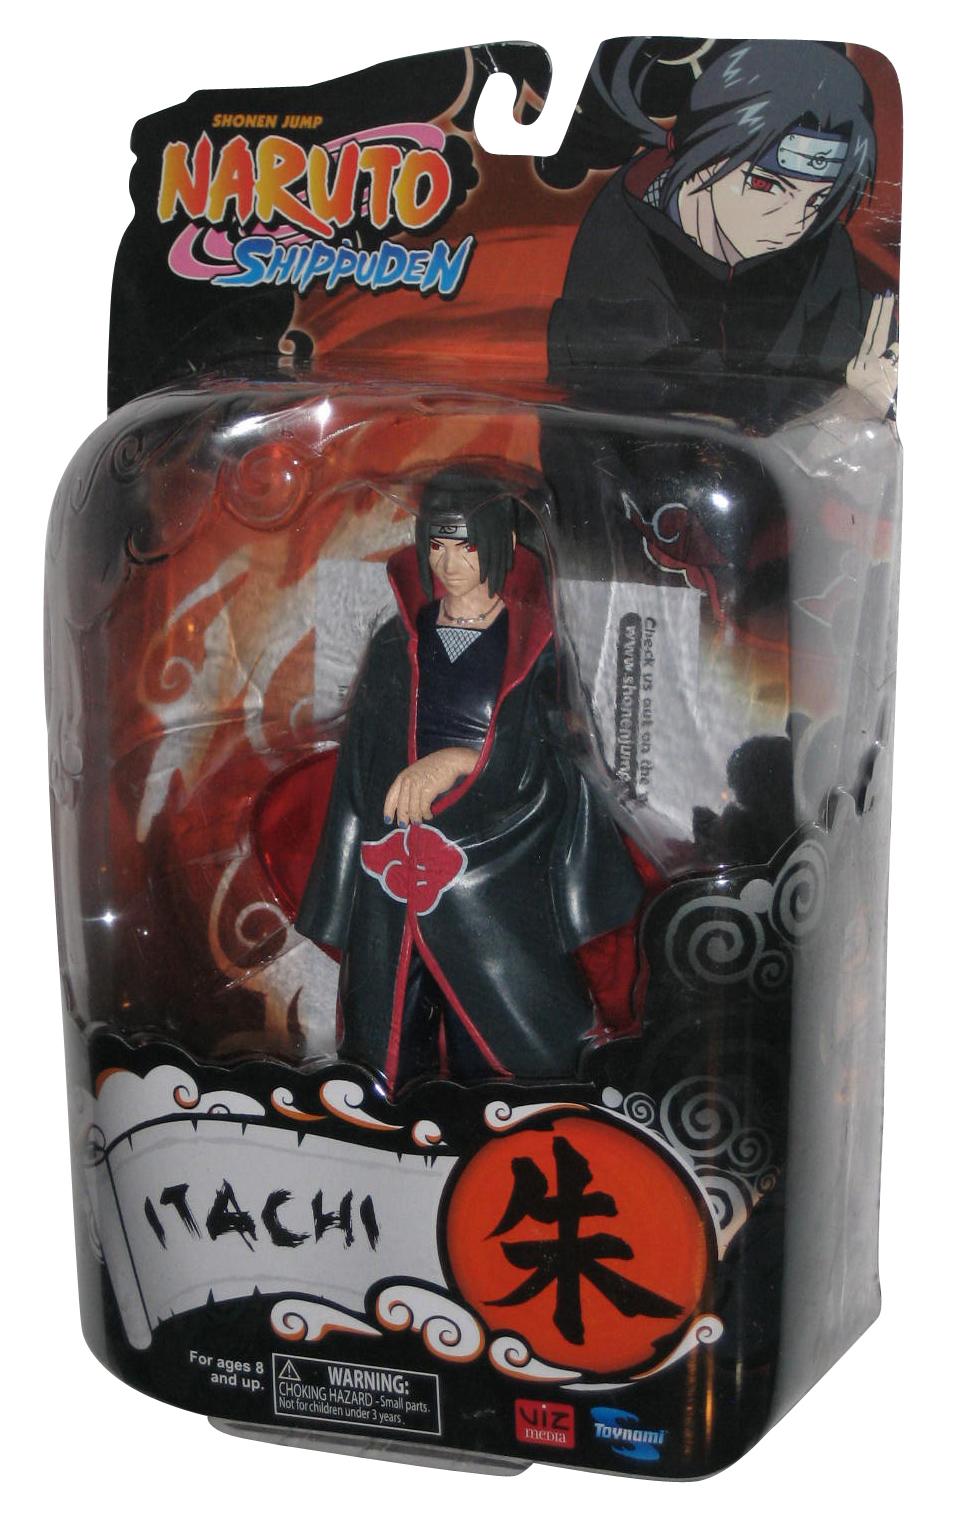 Naruto Shippuden Series 3 Itachi Toynami 6 Inch Action Figure